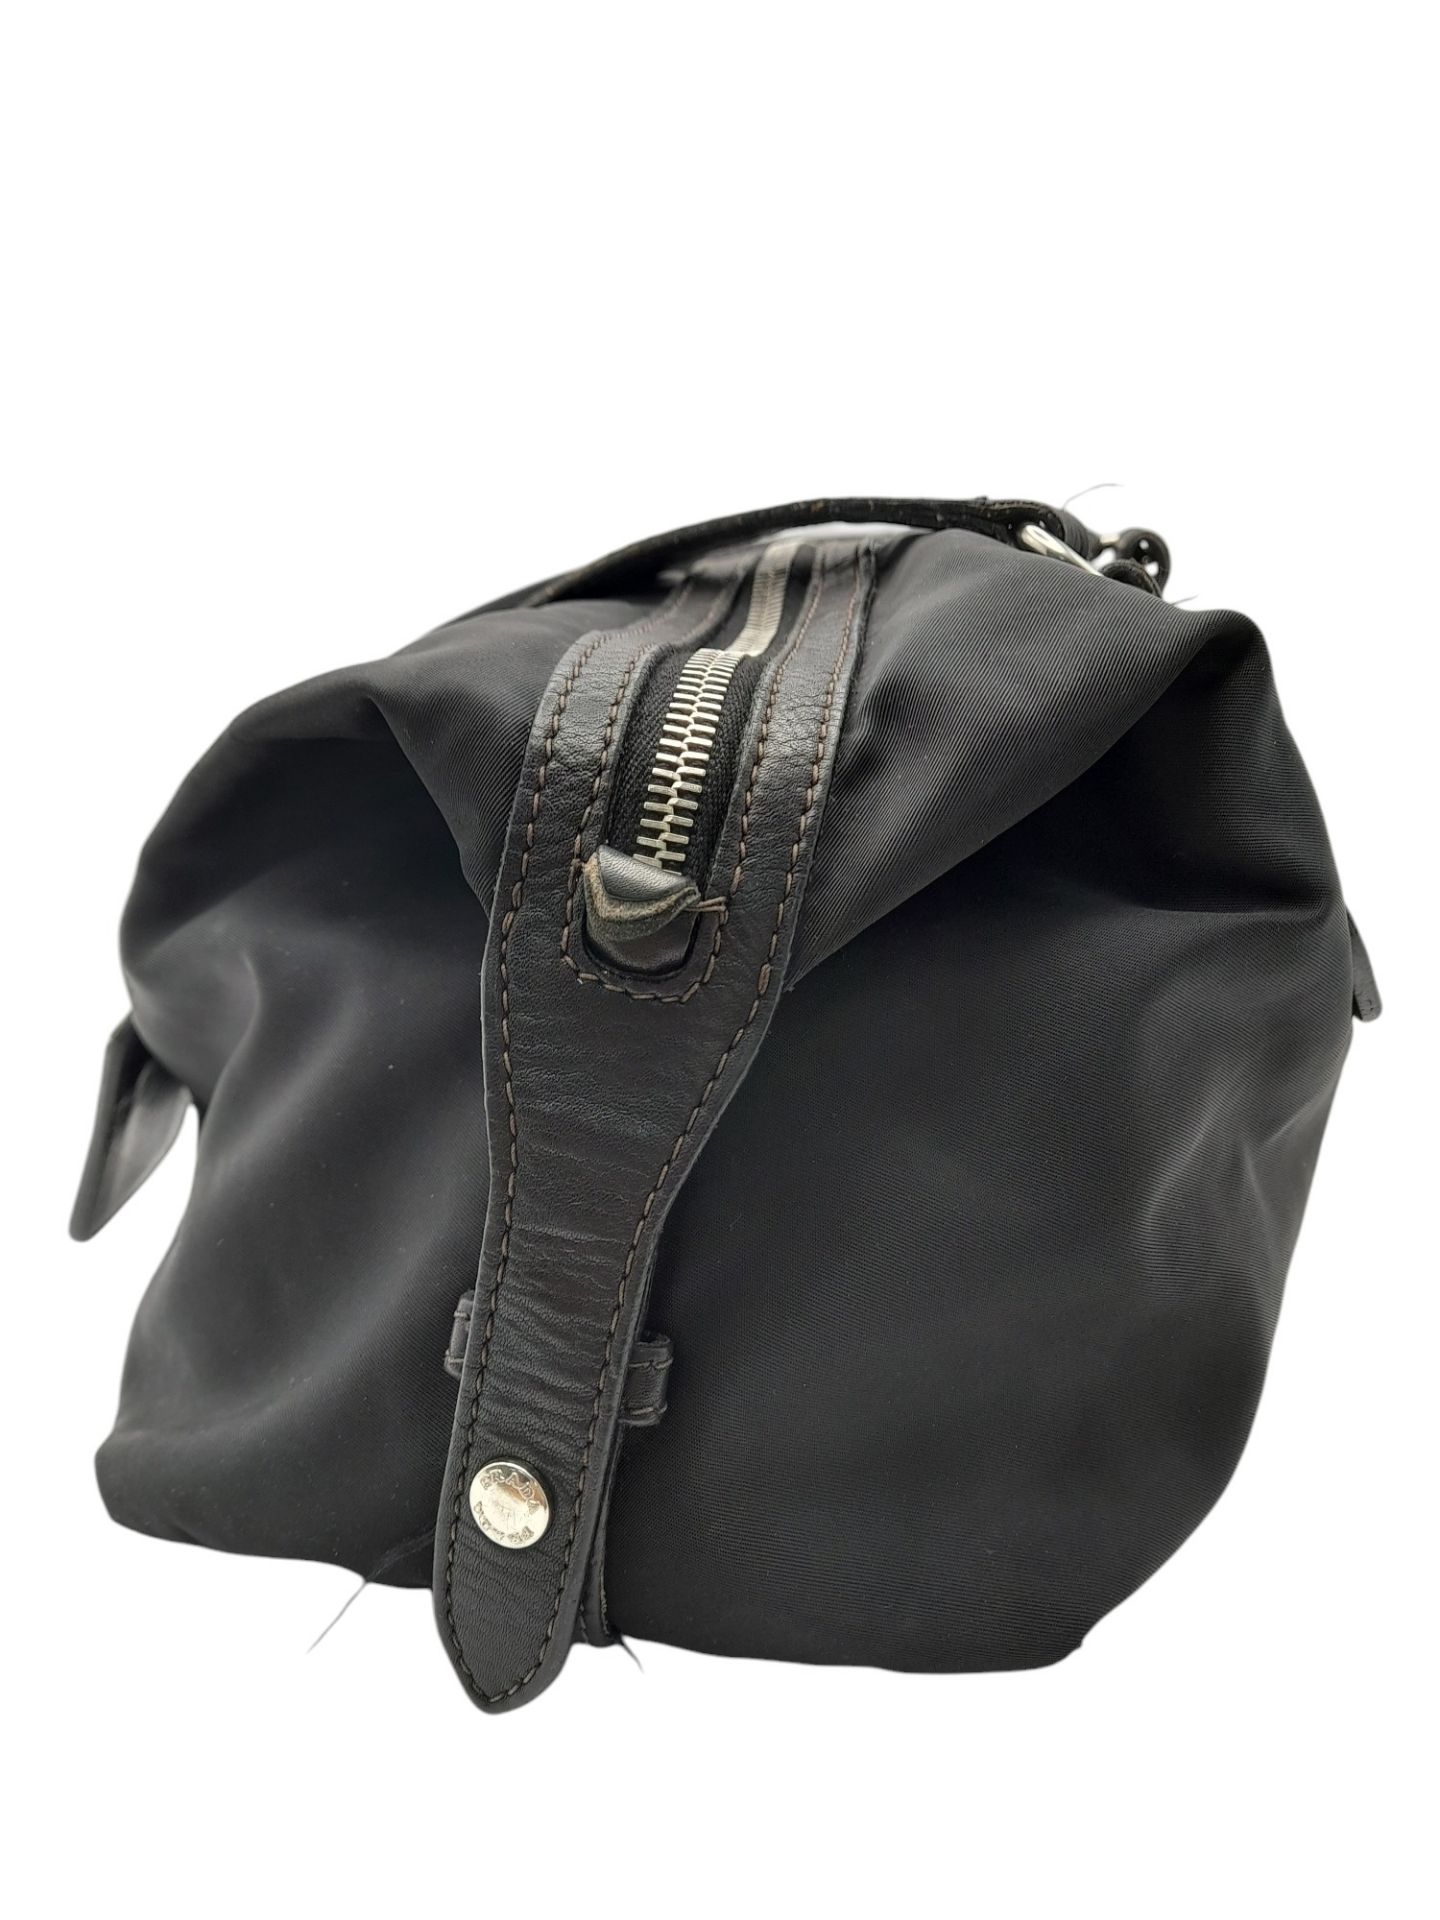 A Prada Black Tessuto Satchel. Textile exterior with leather trim, silver-tone hardware, a top zip - Bild 6 aus 7